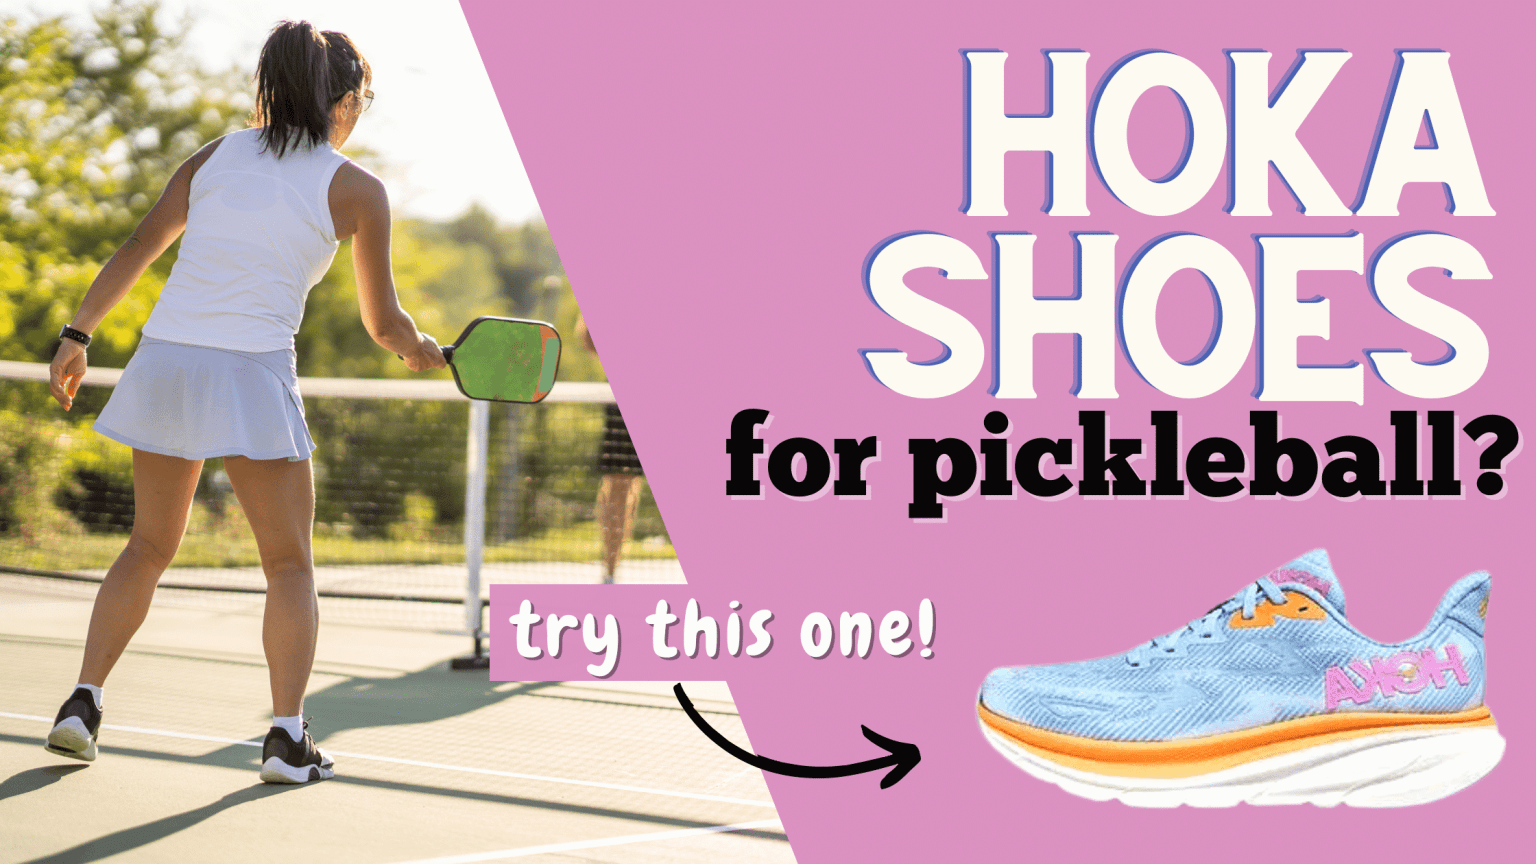 Are HOKA shoes a good choice for pickleball